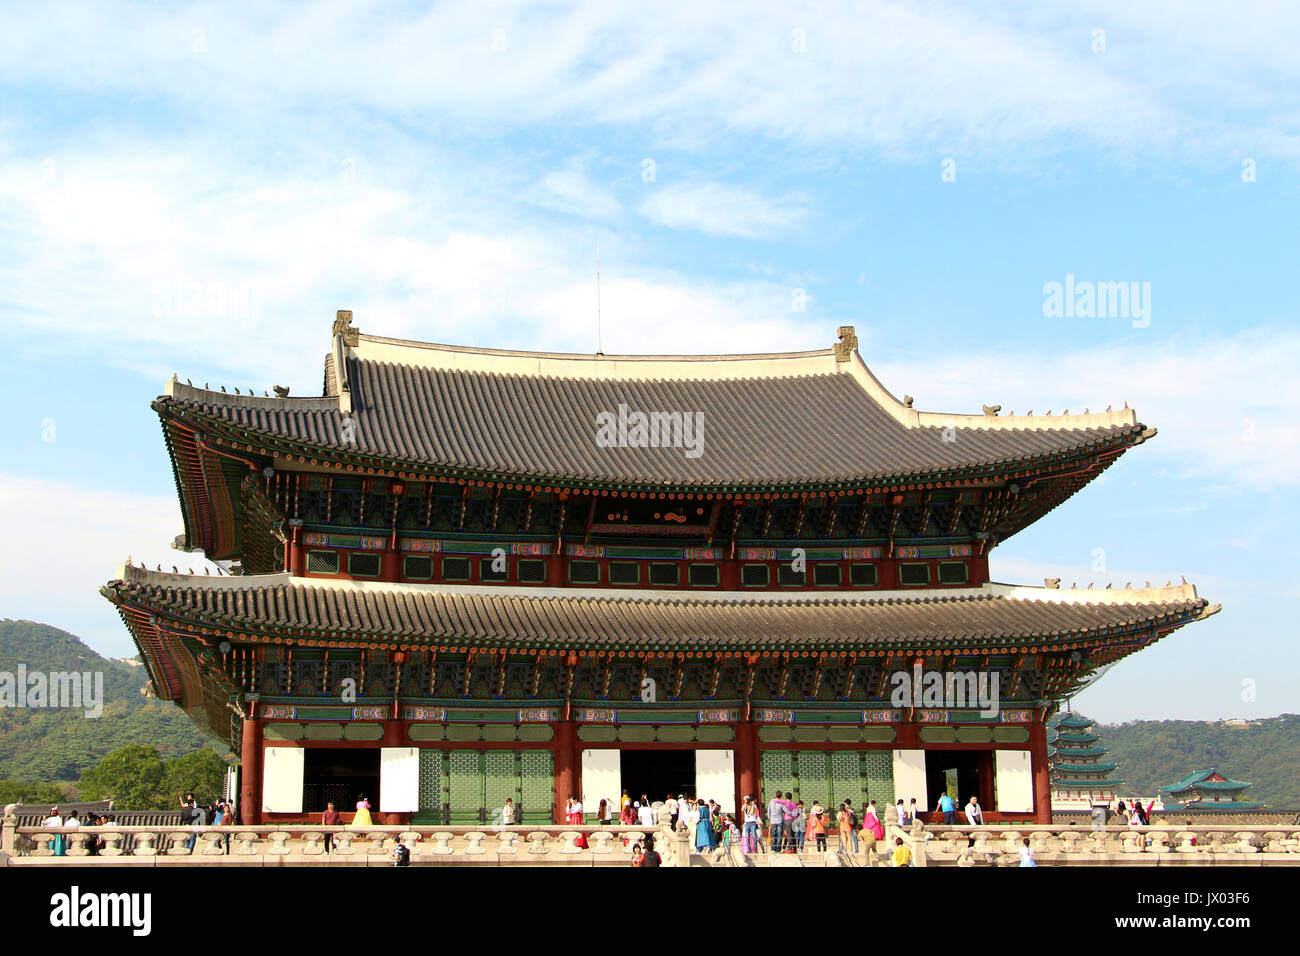 Gyeongbokgung Palace is a popular historical tourist destination in Seoul, South Korea. Stock Photo